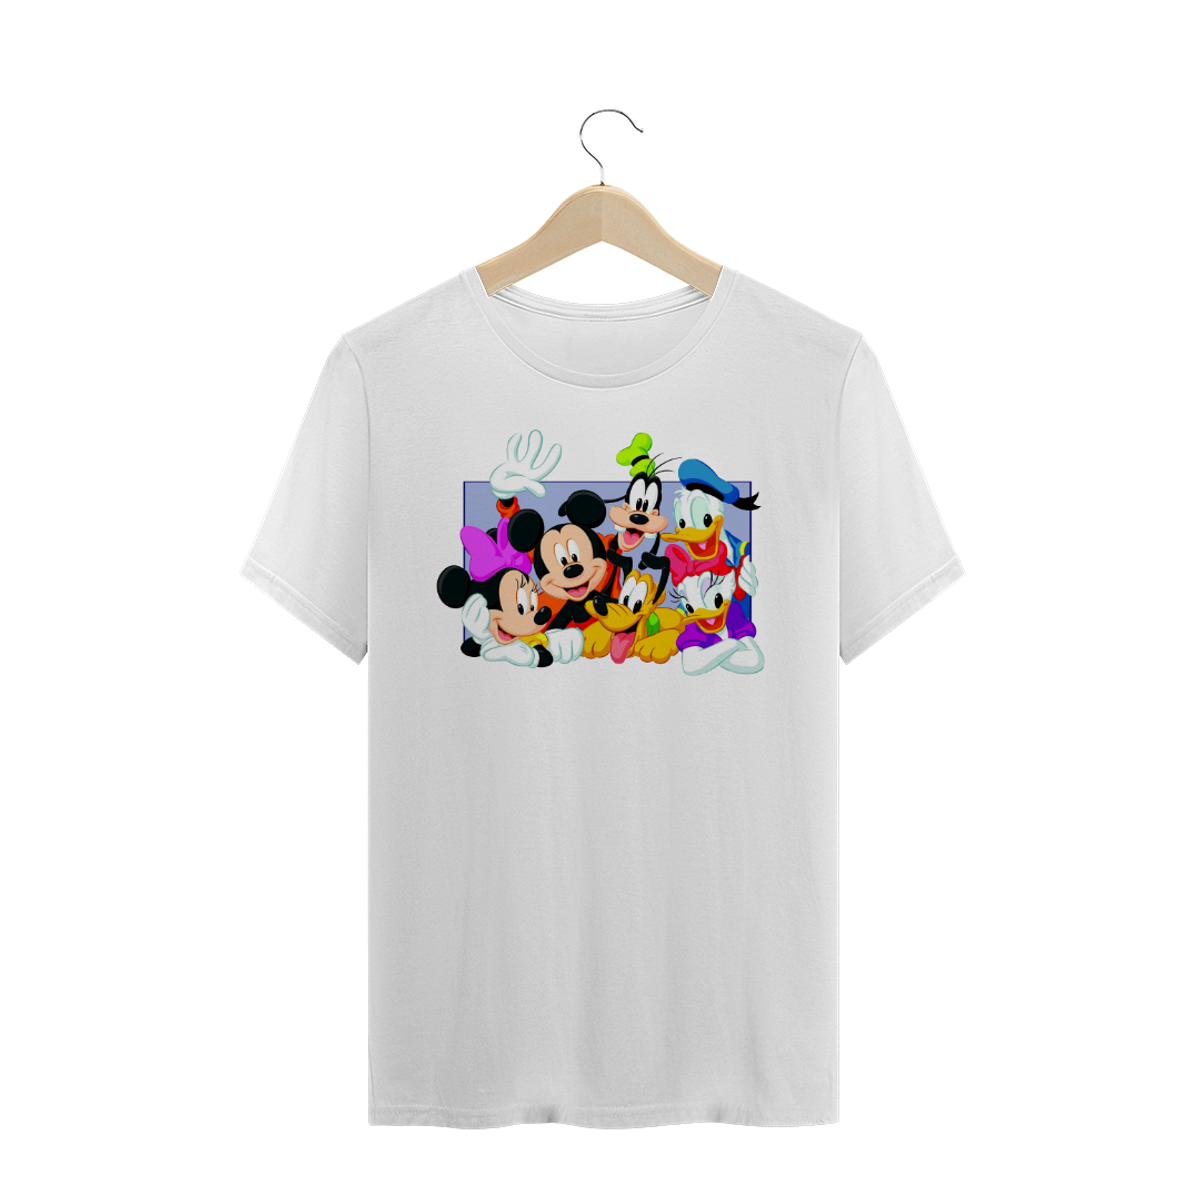 Nome do produto: Turma do Mickey